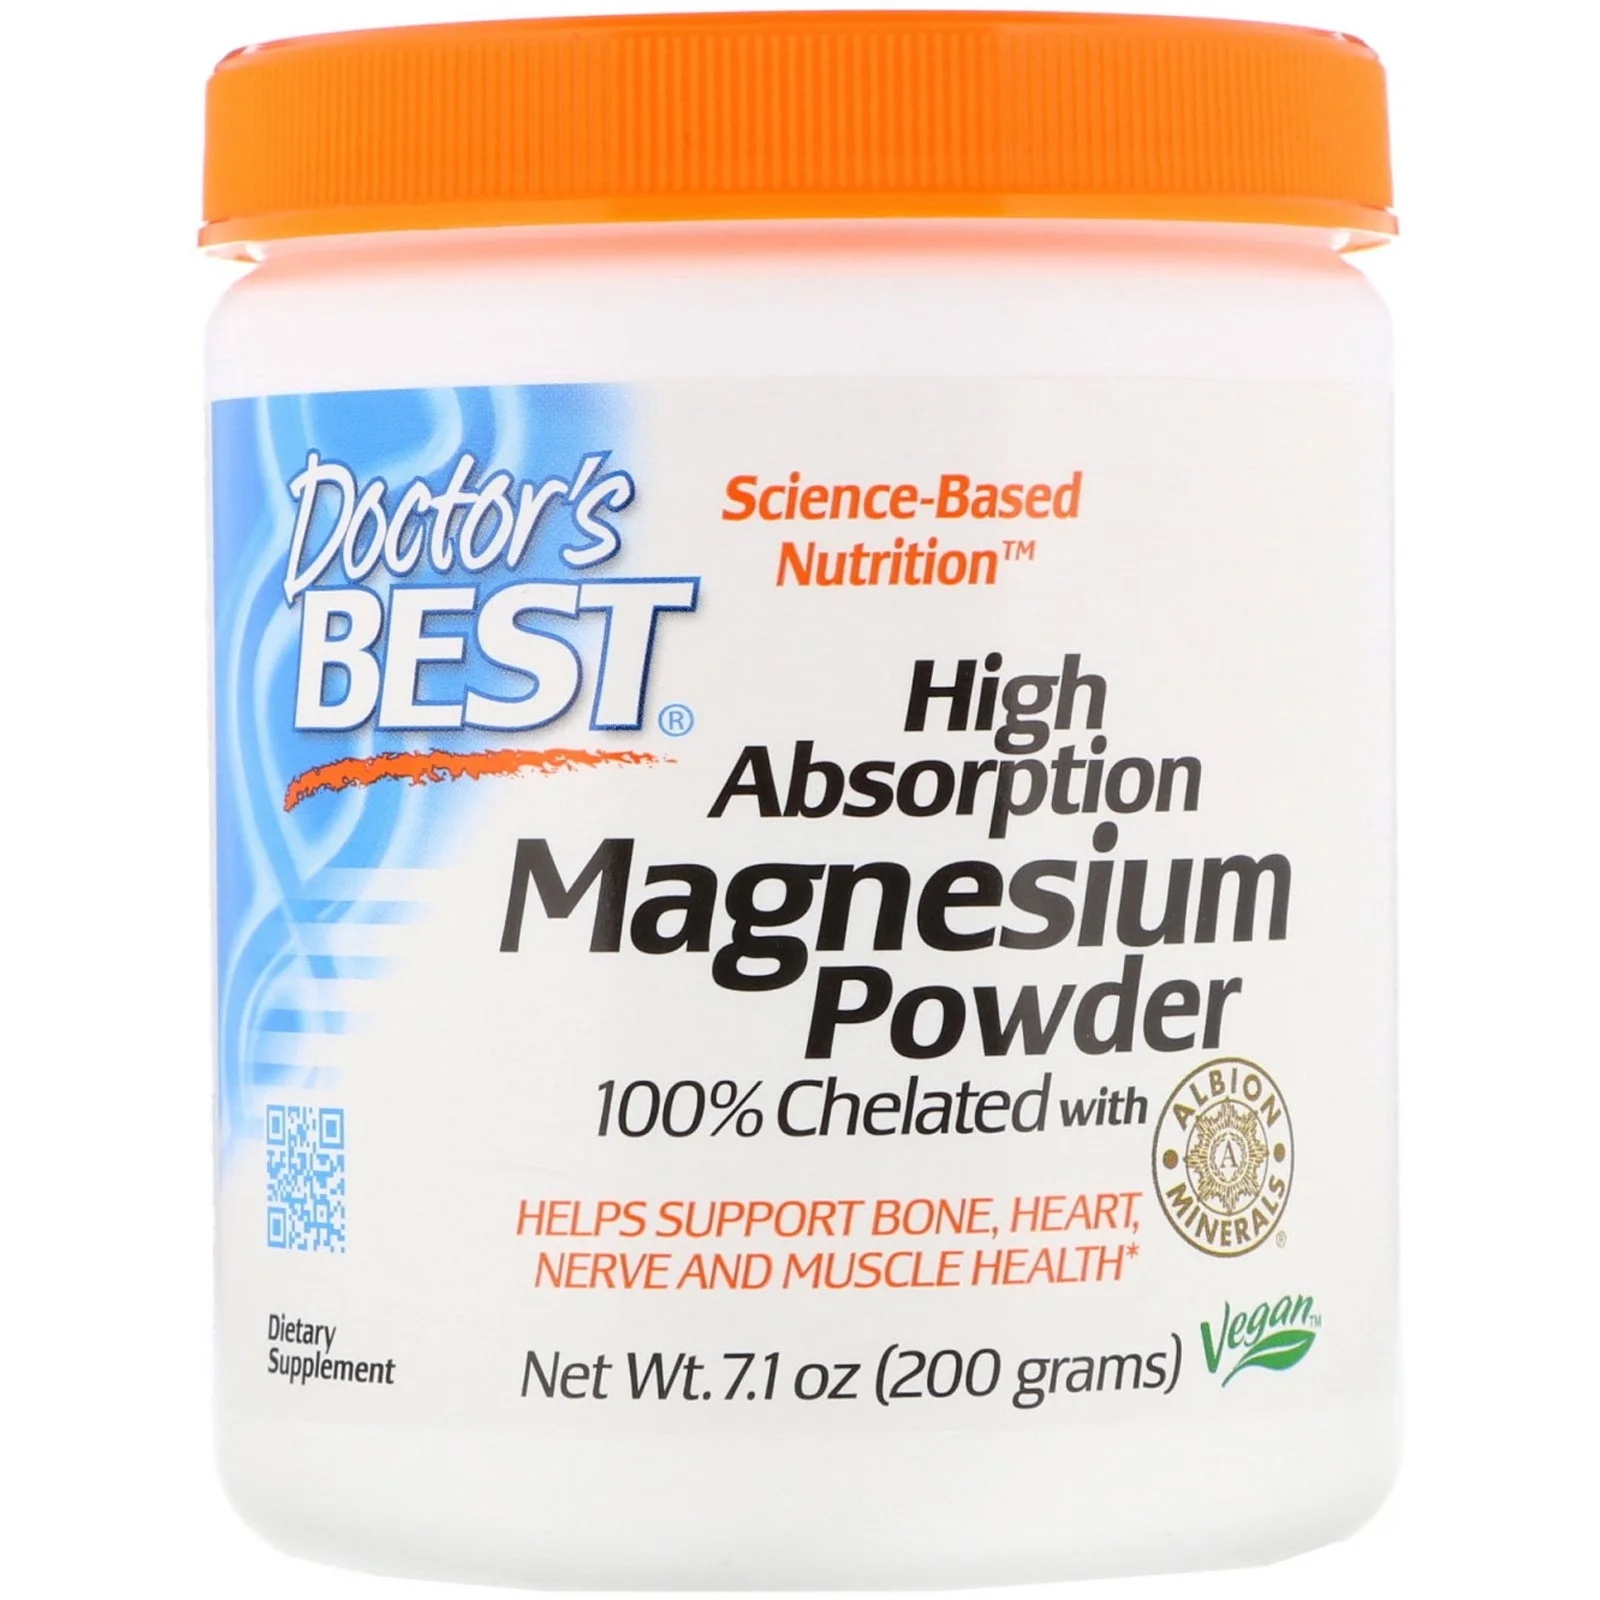 Doctors Best High Absorption Magnesium Powder 200g